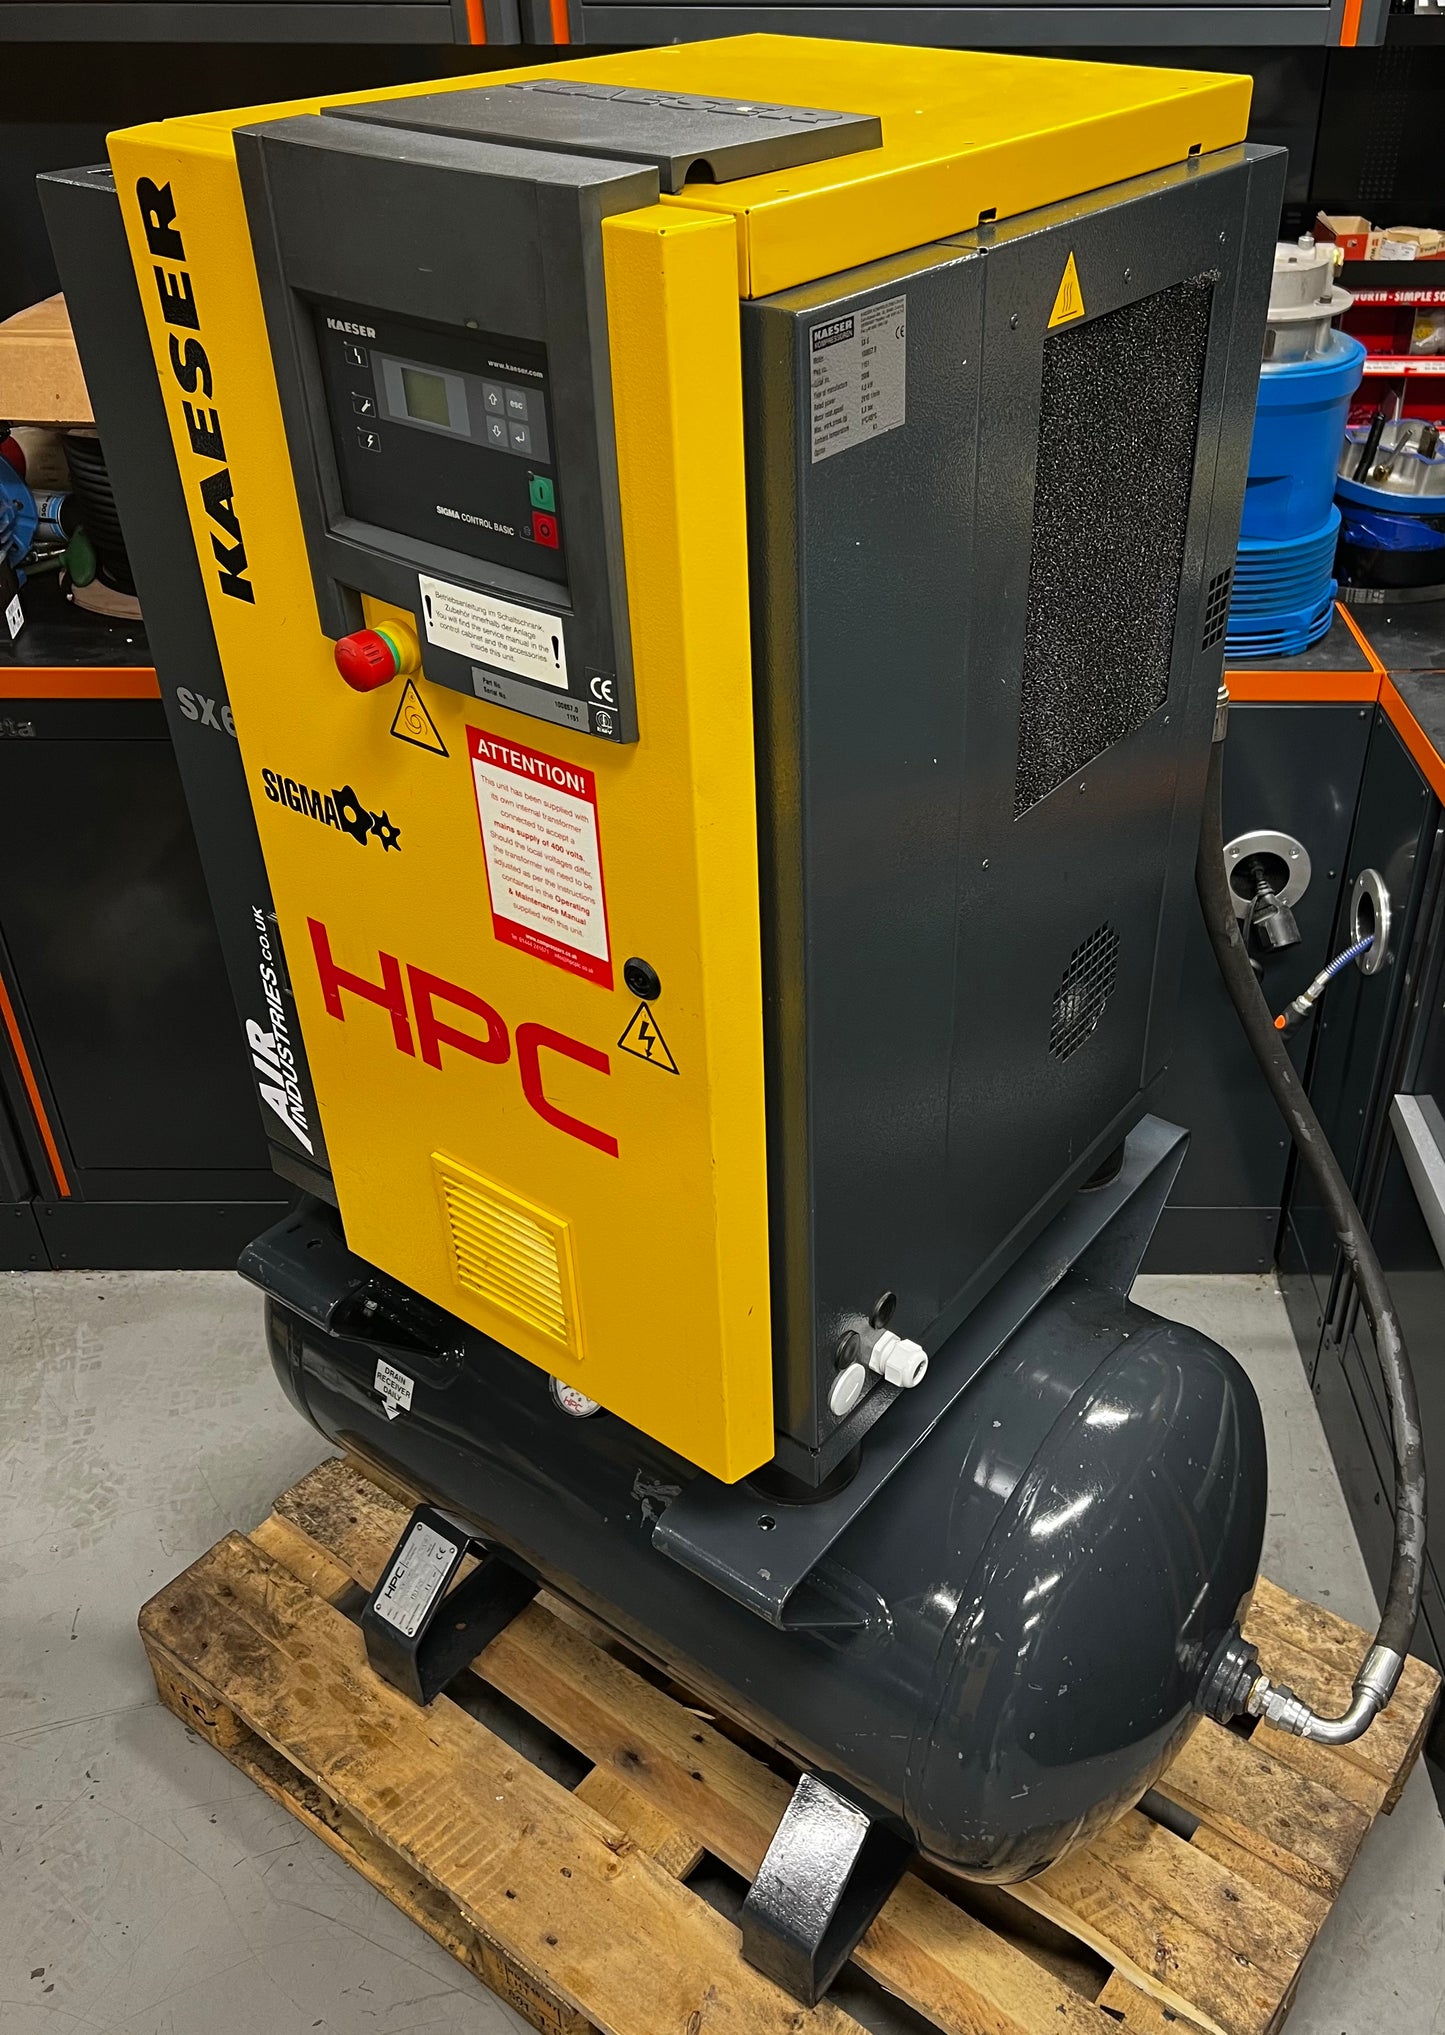 HPC / Kaeser SX6 Receiver Mounted Rotary Screw Compressor (4.0kW, 5.5HP, 17CFM)